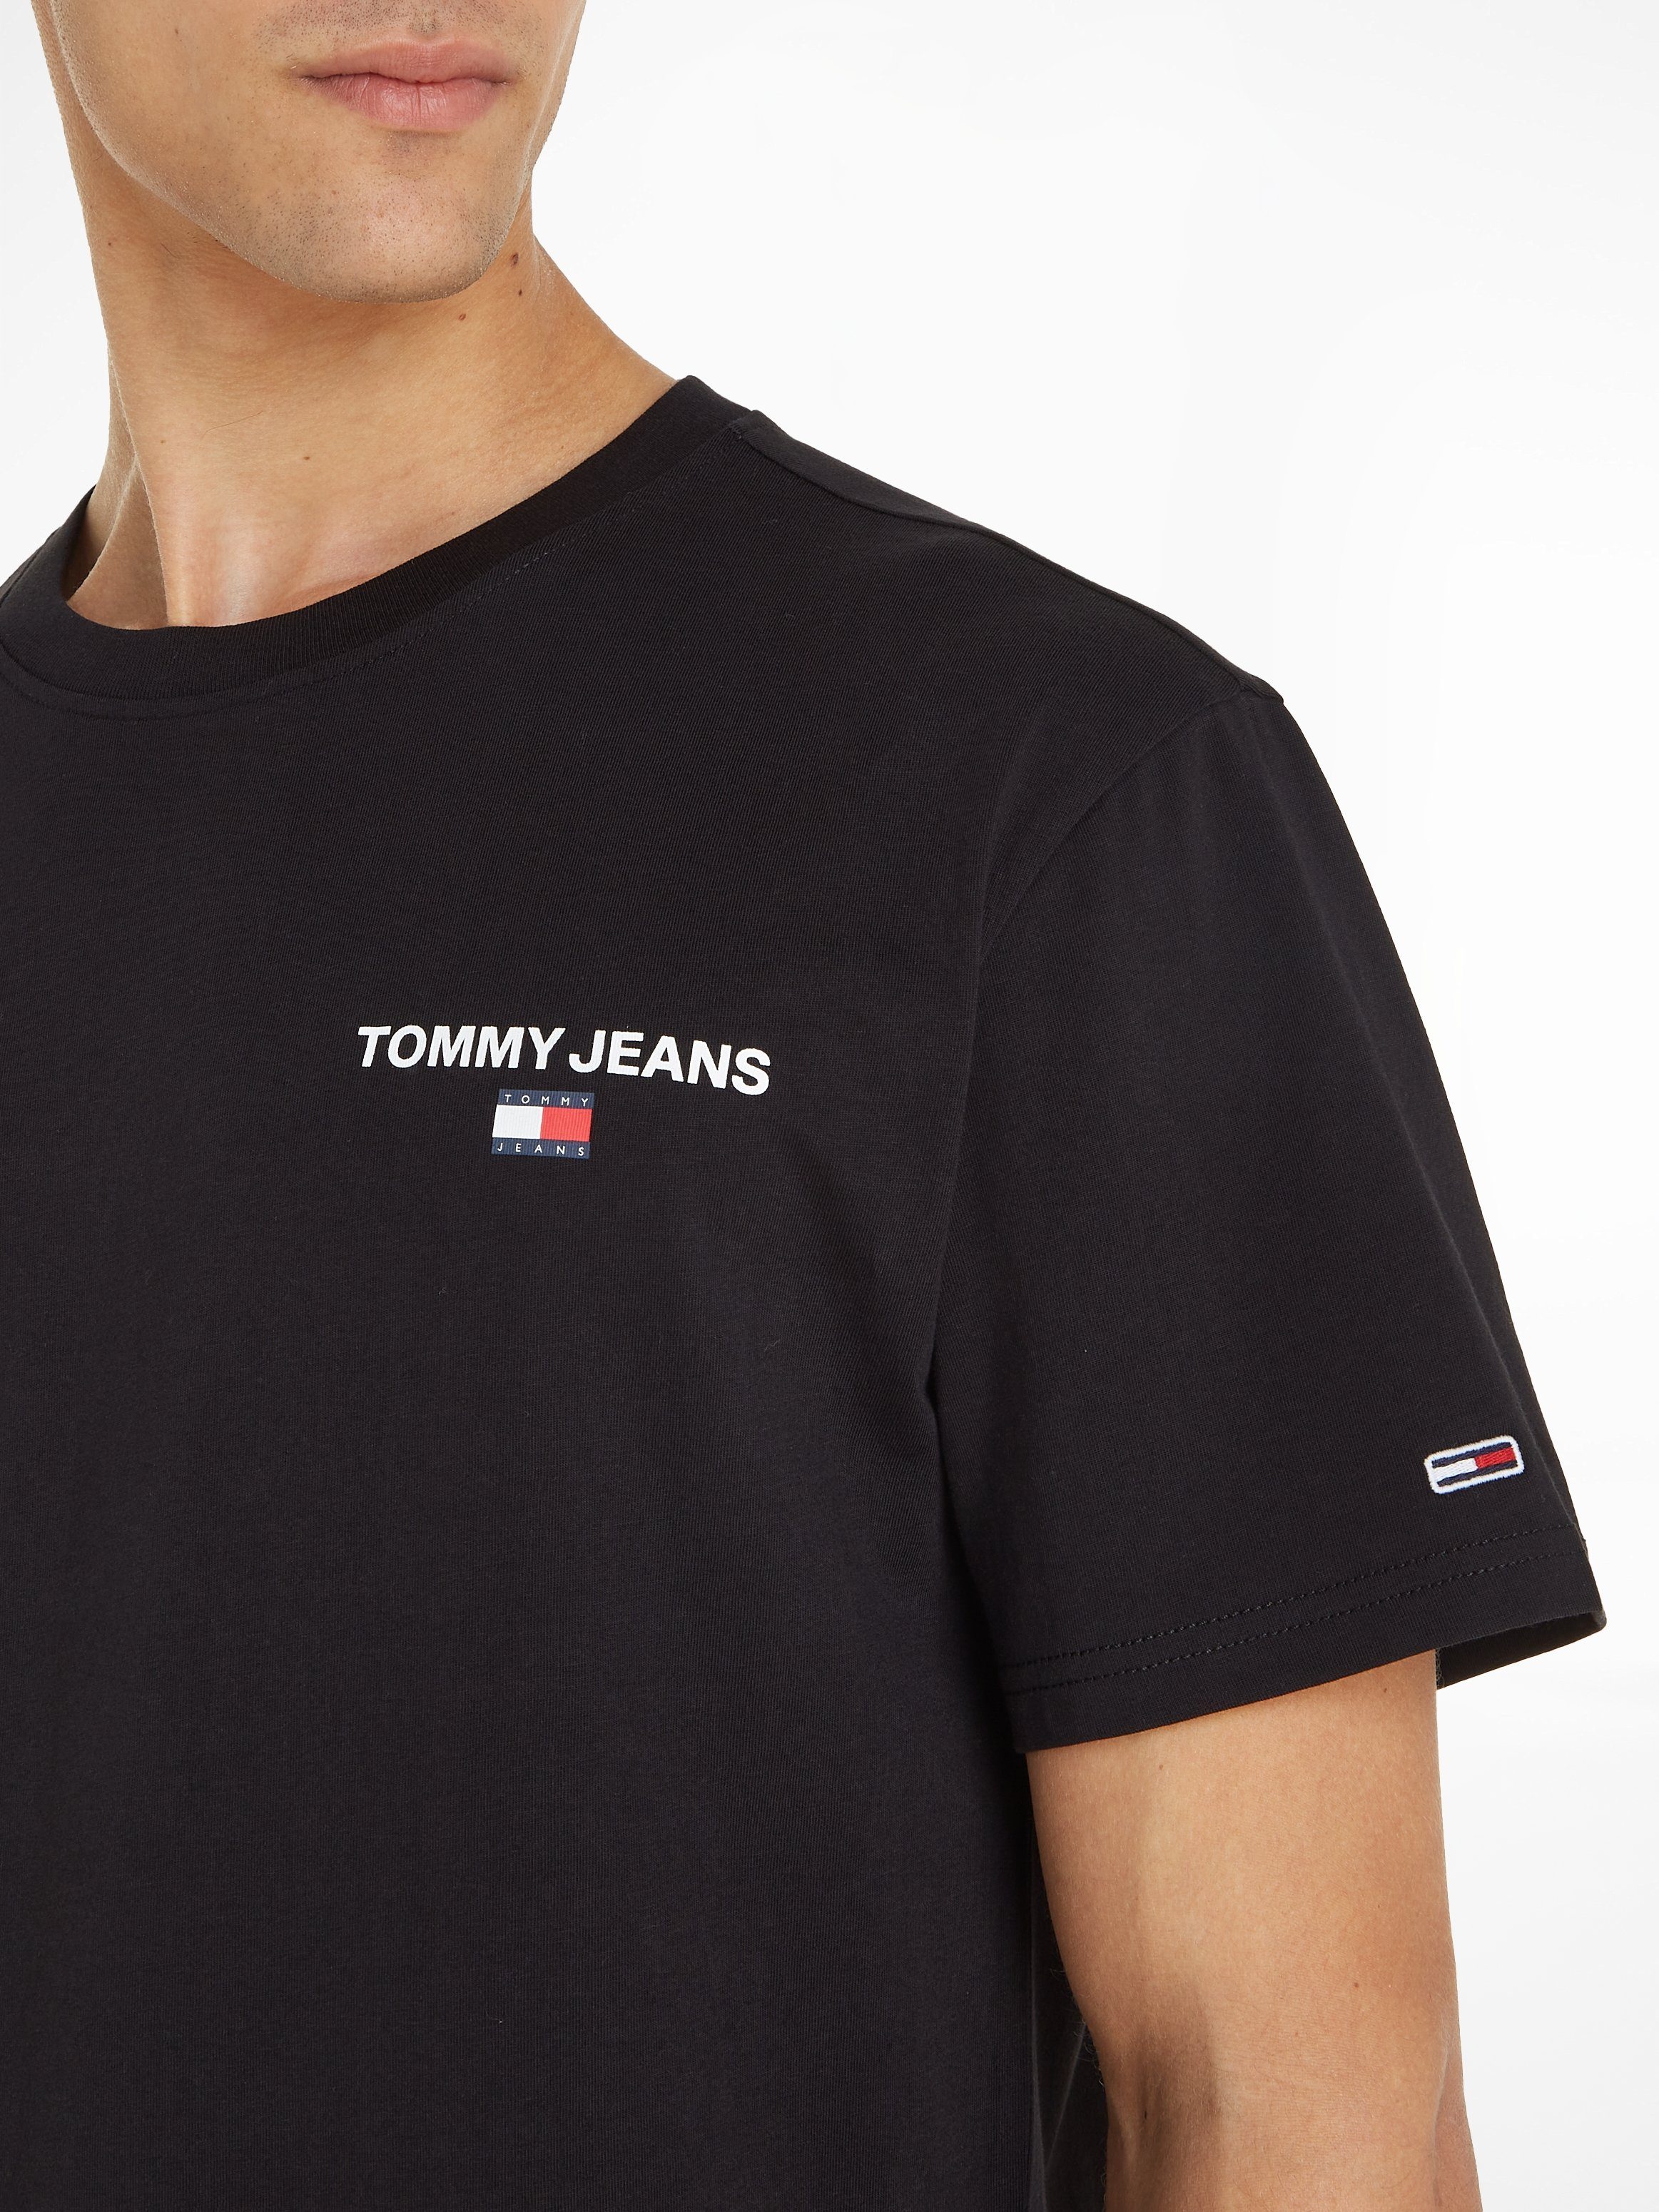 TJM Jeans PRINT Tommy TEE CLSC Black BACK LINEAR T-Shirt